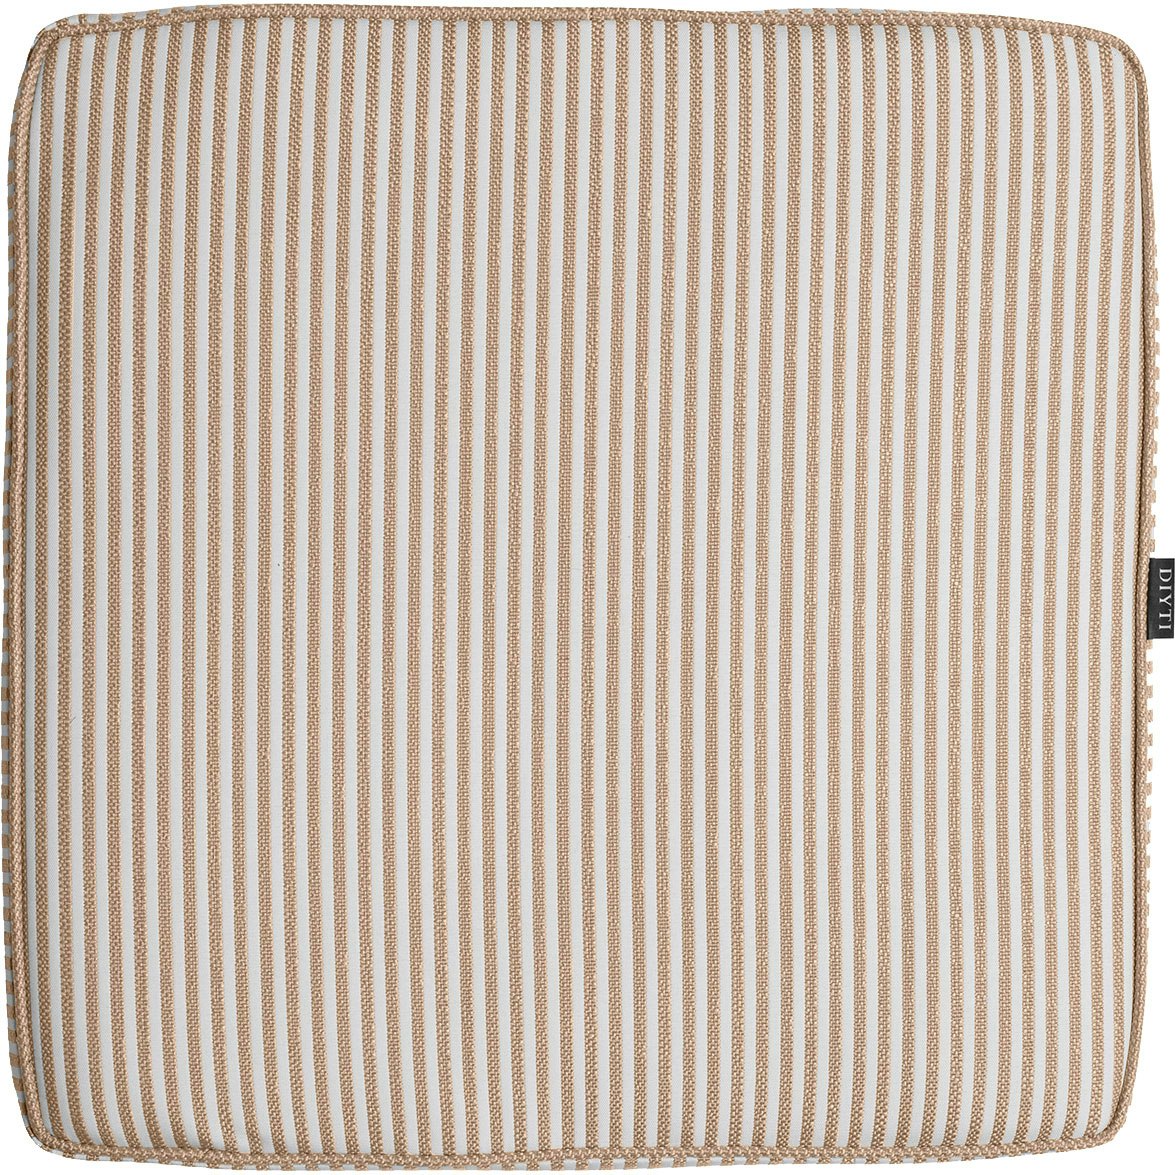 Narrow Stripe Cushion 45x45 cm, Beige